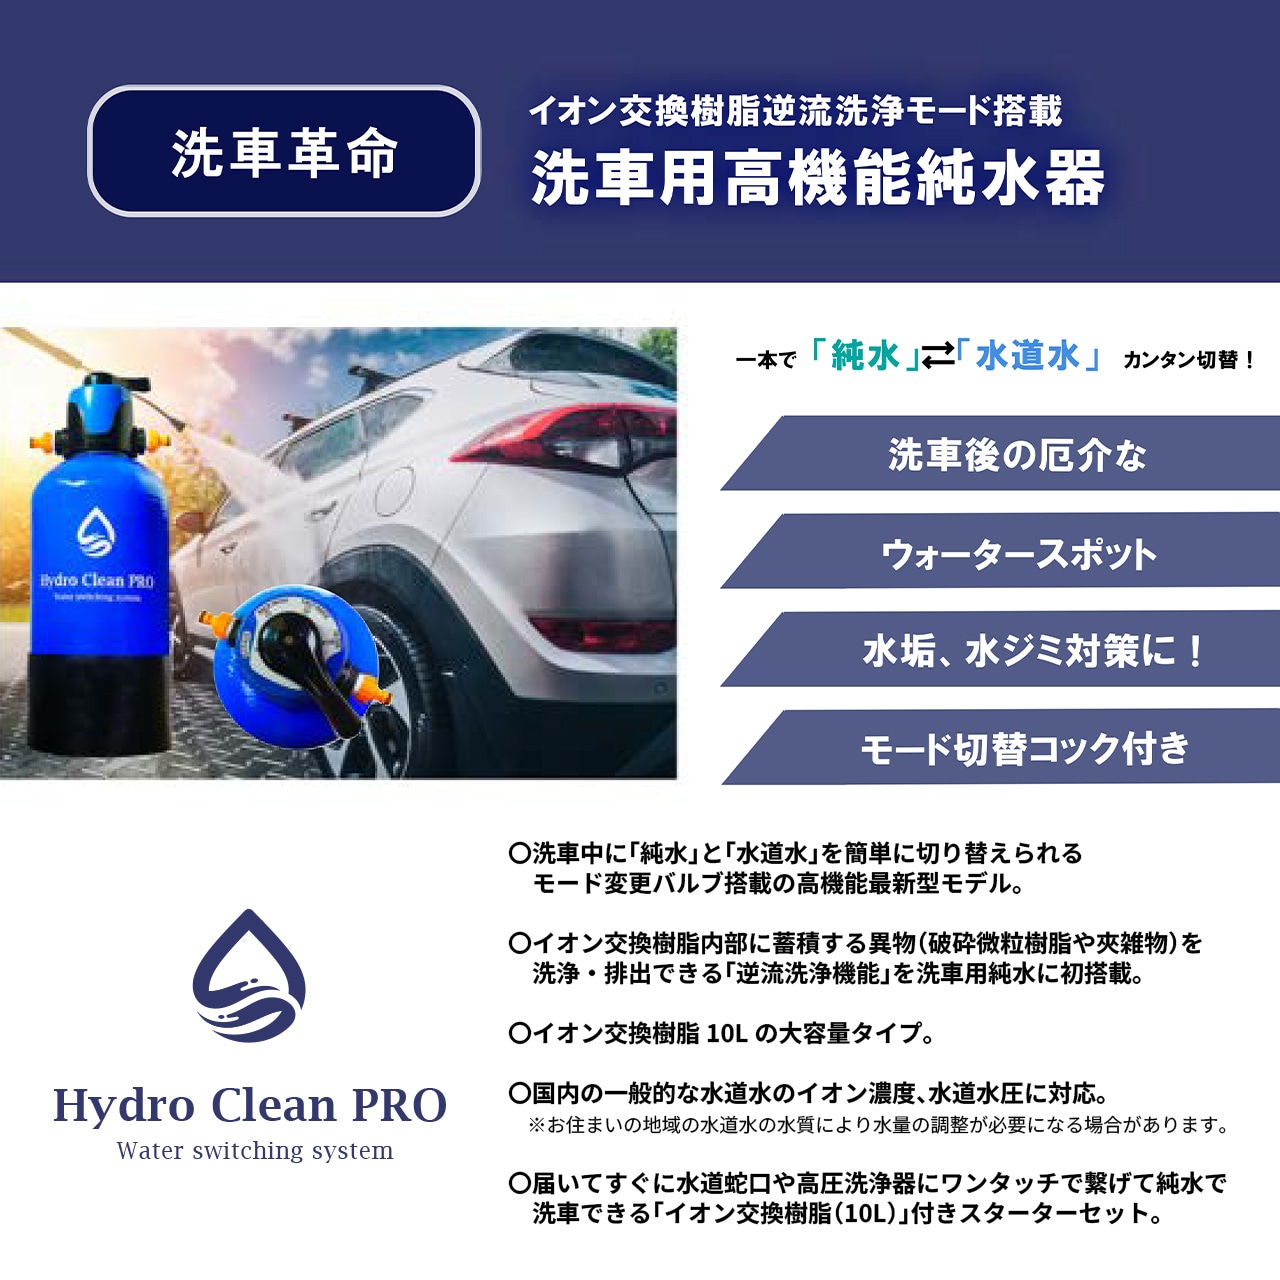 Hydro Clean Pro